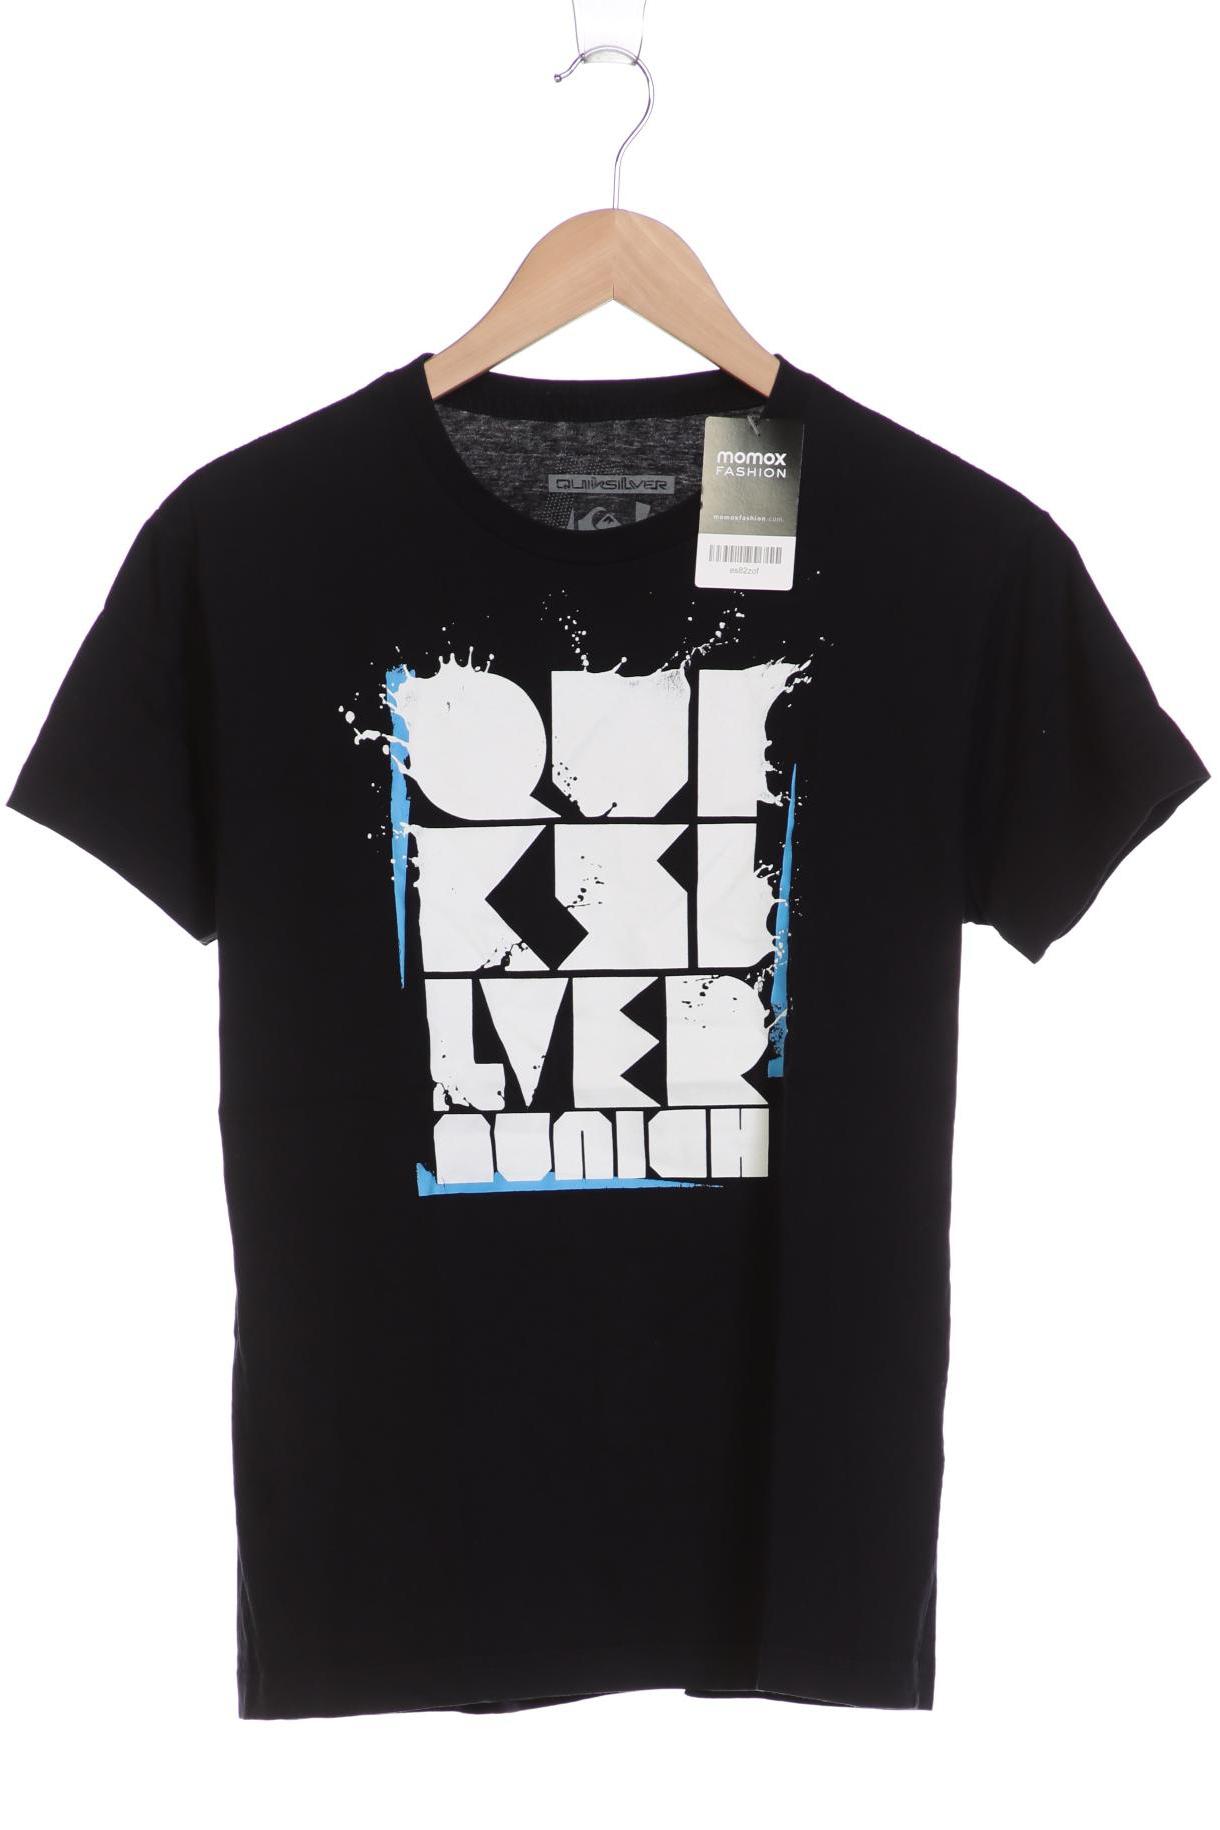 QUIKSILVER Herren T-Shirt, marineblau von Quiksilver